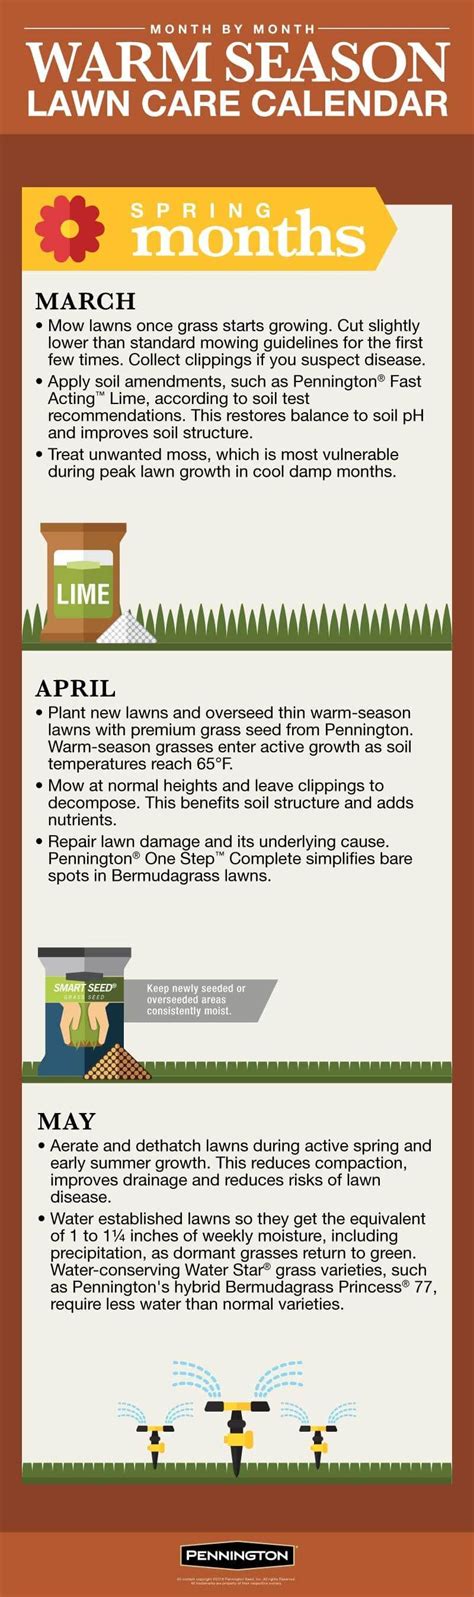 Lawn Care Calendar For Warm Season Lawns Infographic